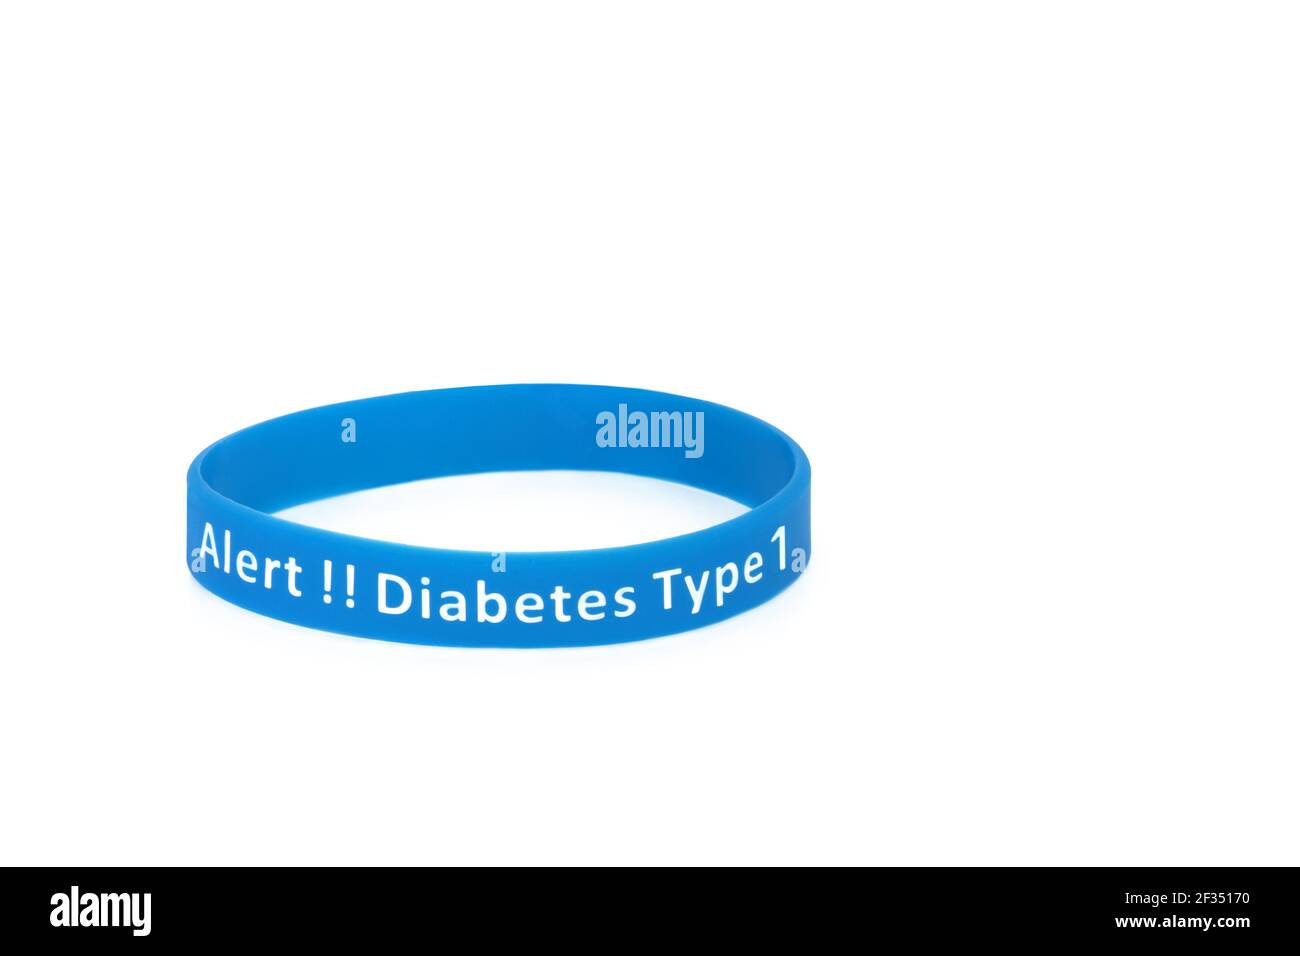 Diabetes type 1 alert wristband in blue rubber silicone on white background. Stock Photo